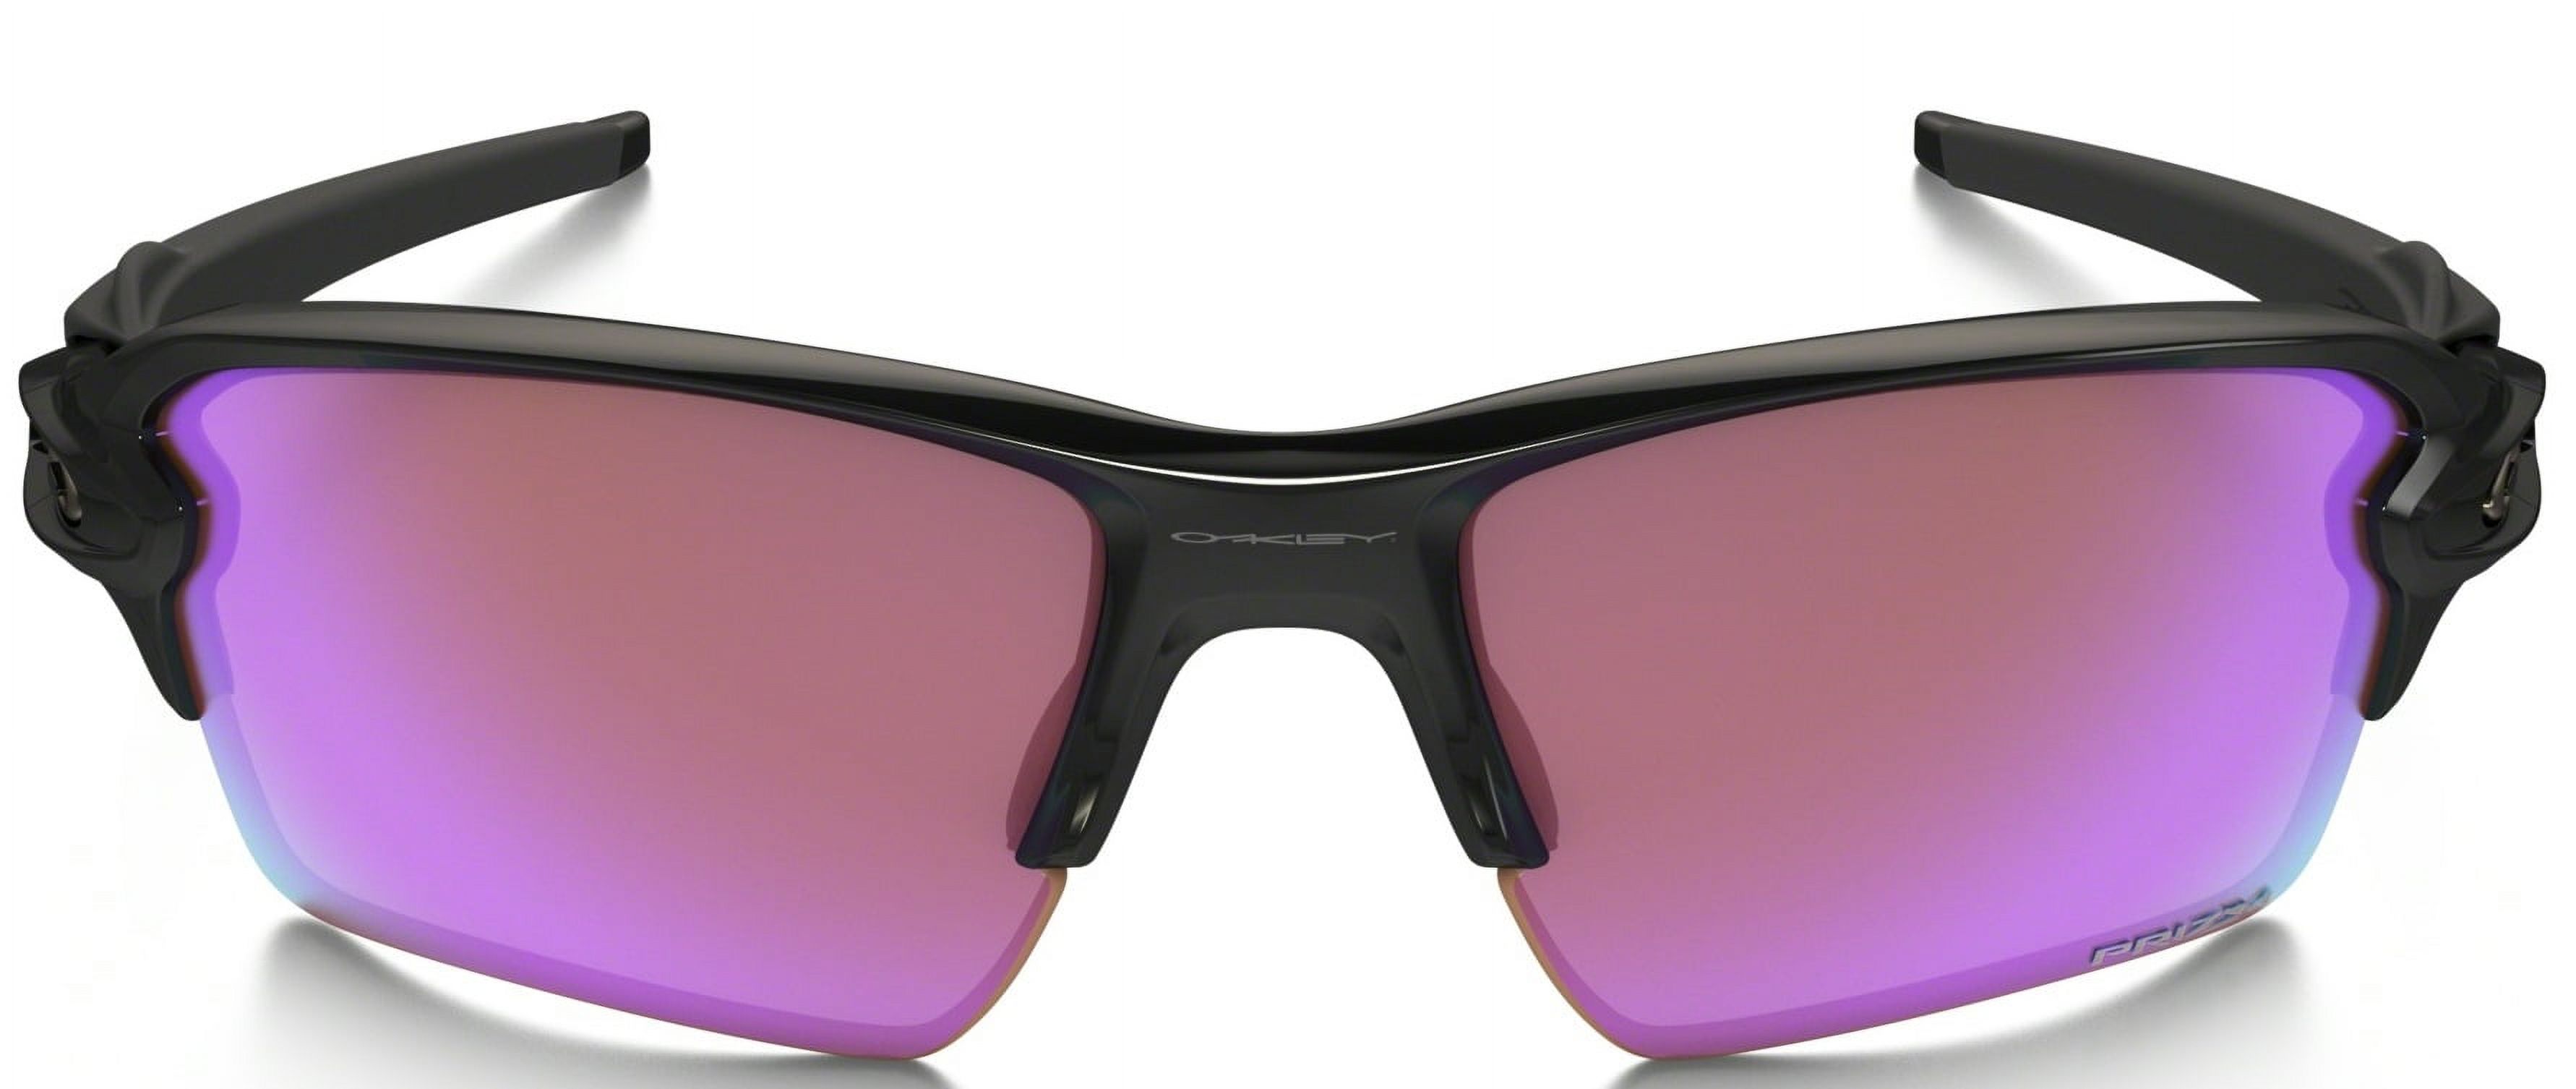 Oakley Flak 2.0 Prizm Golf Sport Men's Sunglasses OO9188 918805 59 - image 1 of 3